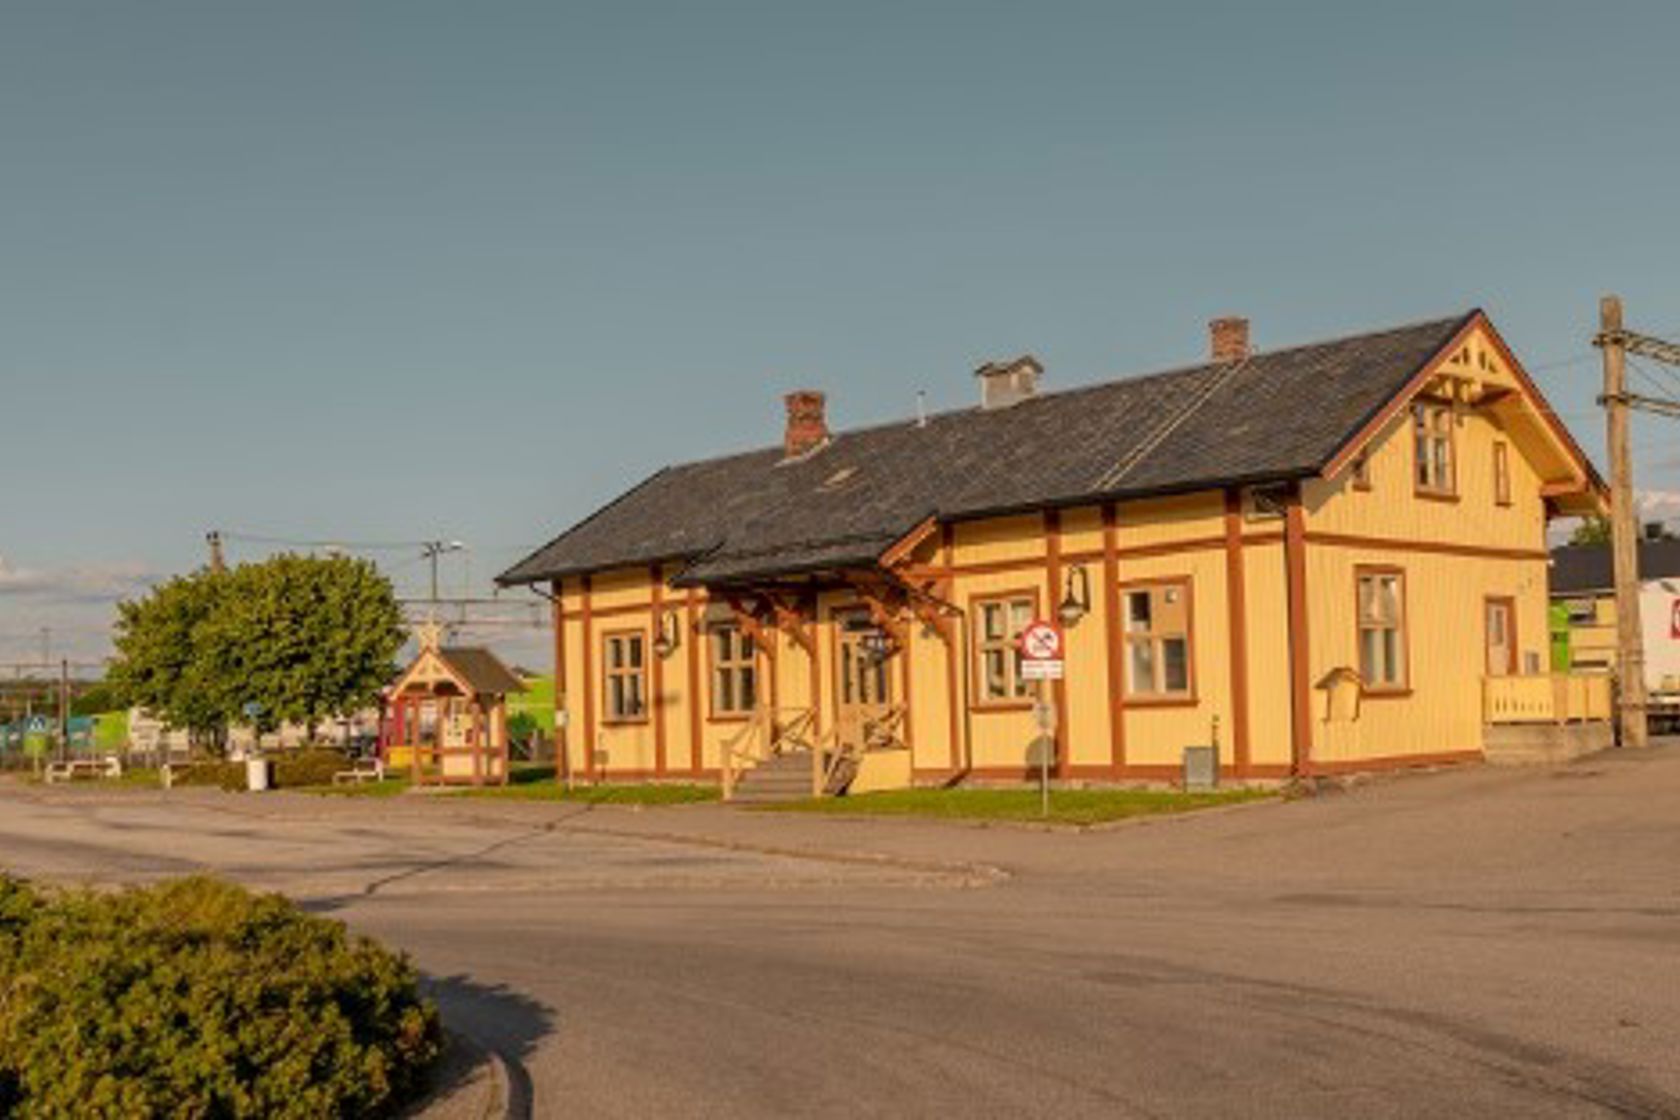 Exterior view of Skarnes station